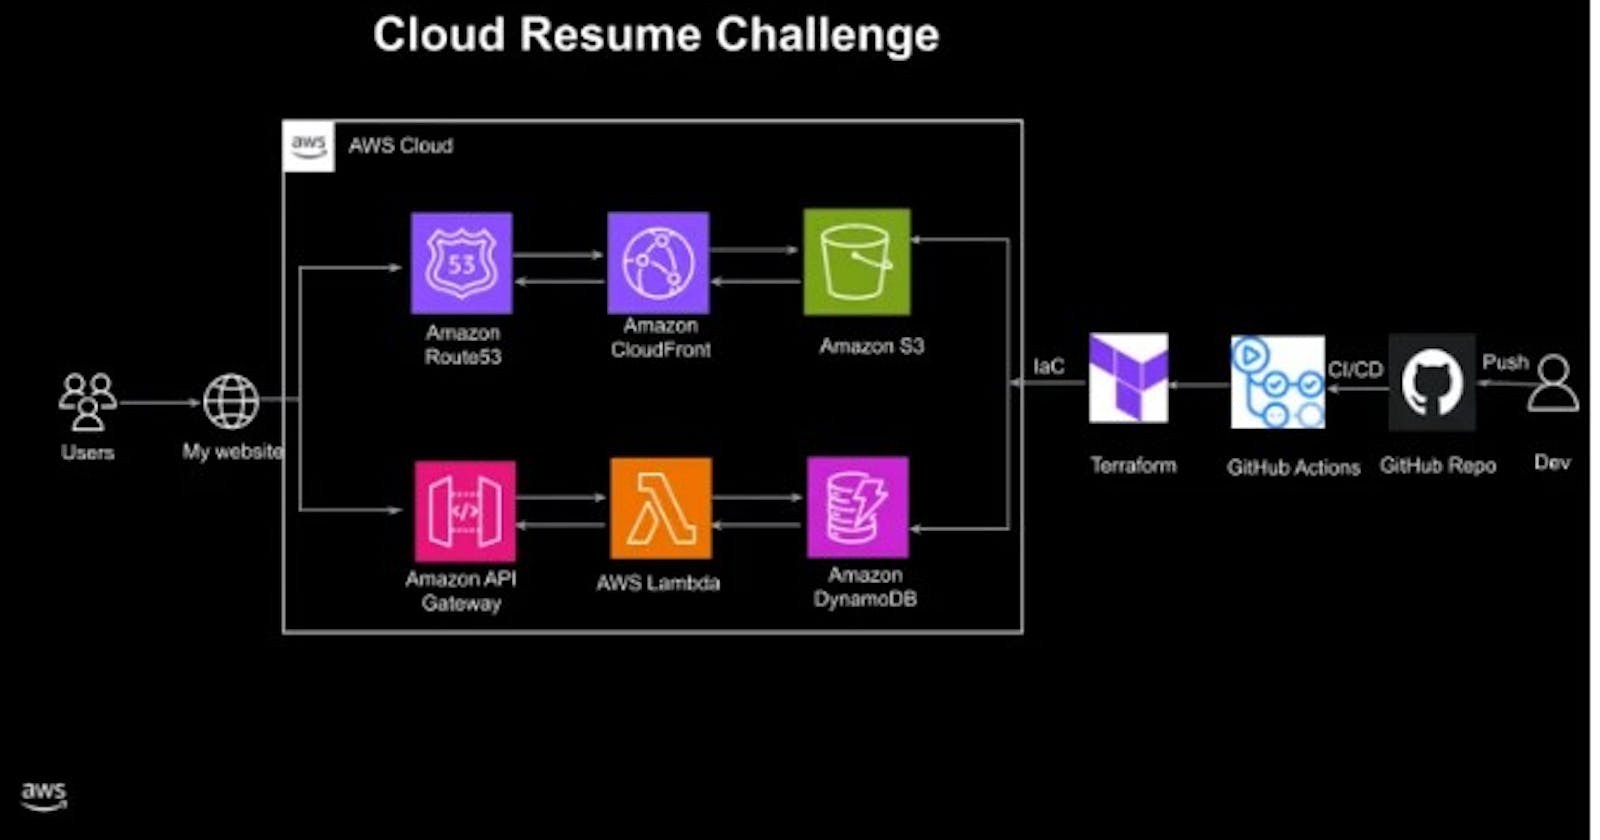 AWS Cloud resume challenge